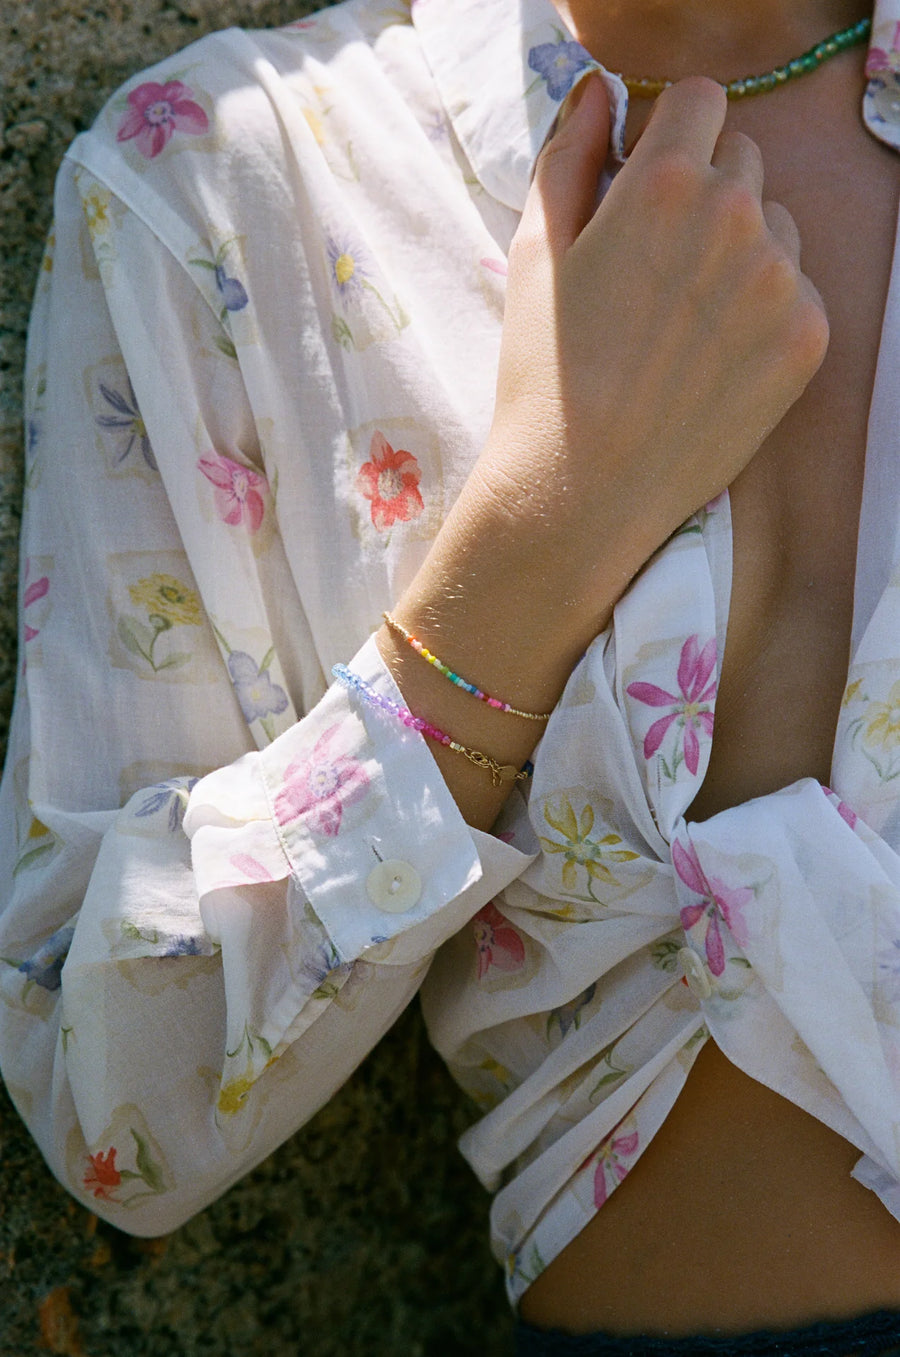 ANNI LU Seaside Shimmer Bracelet - Gold